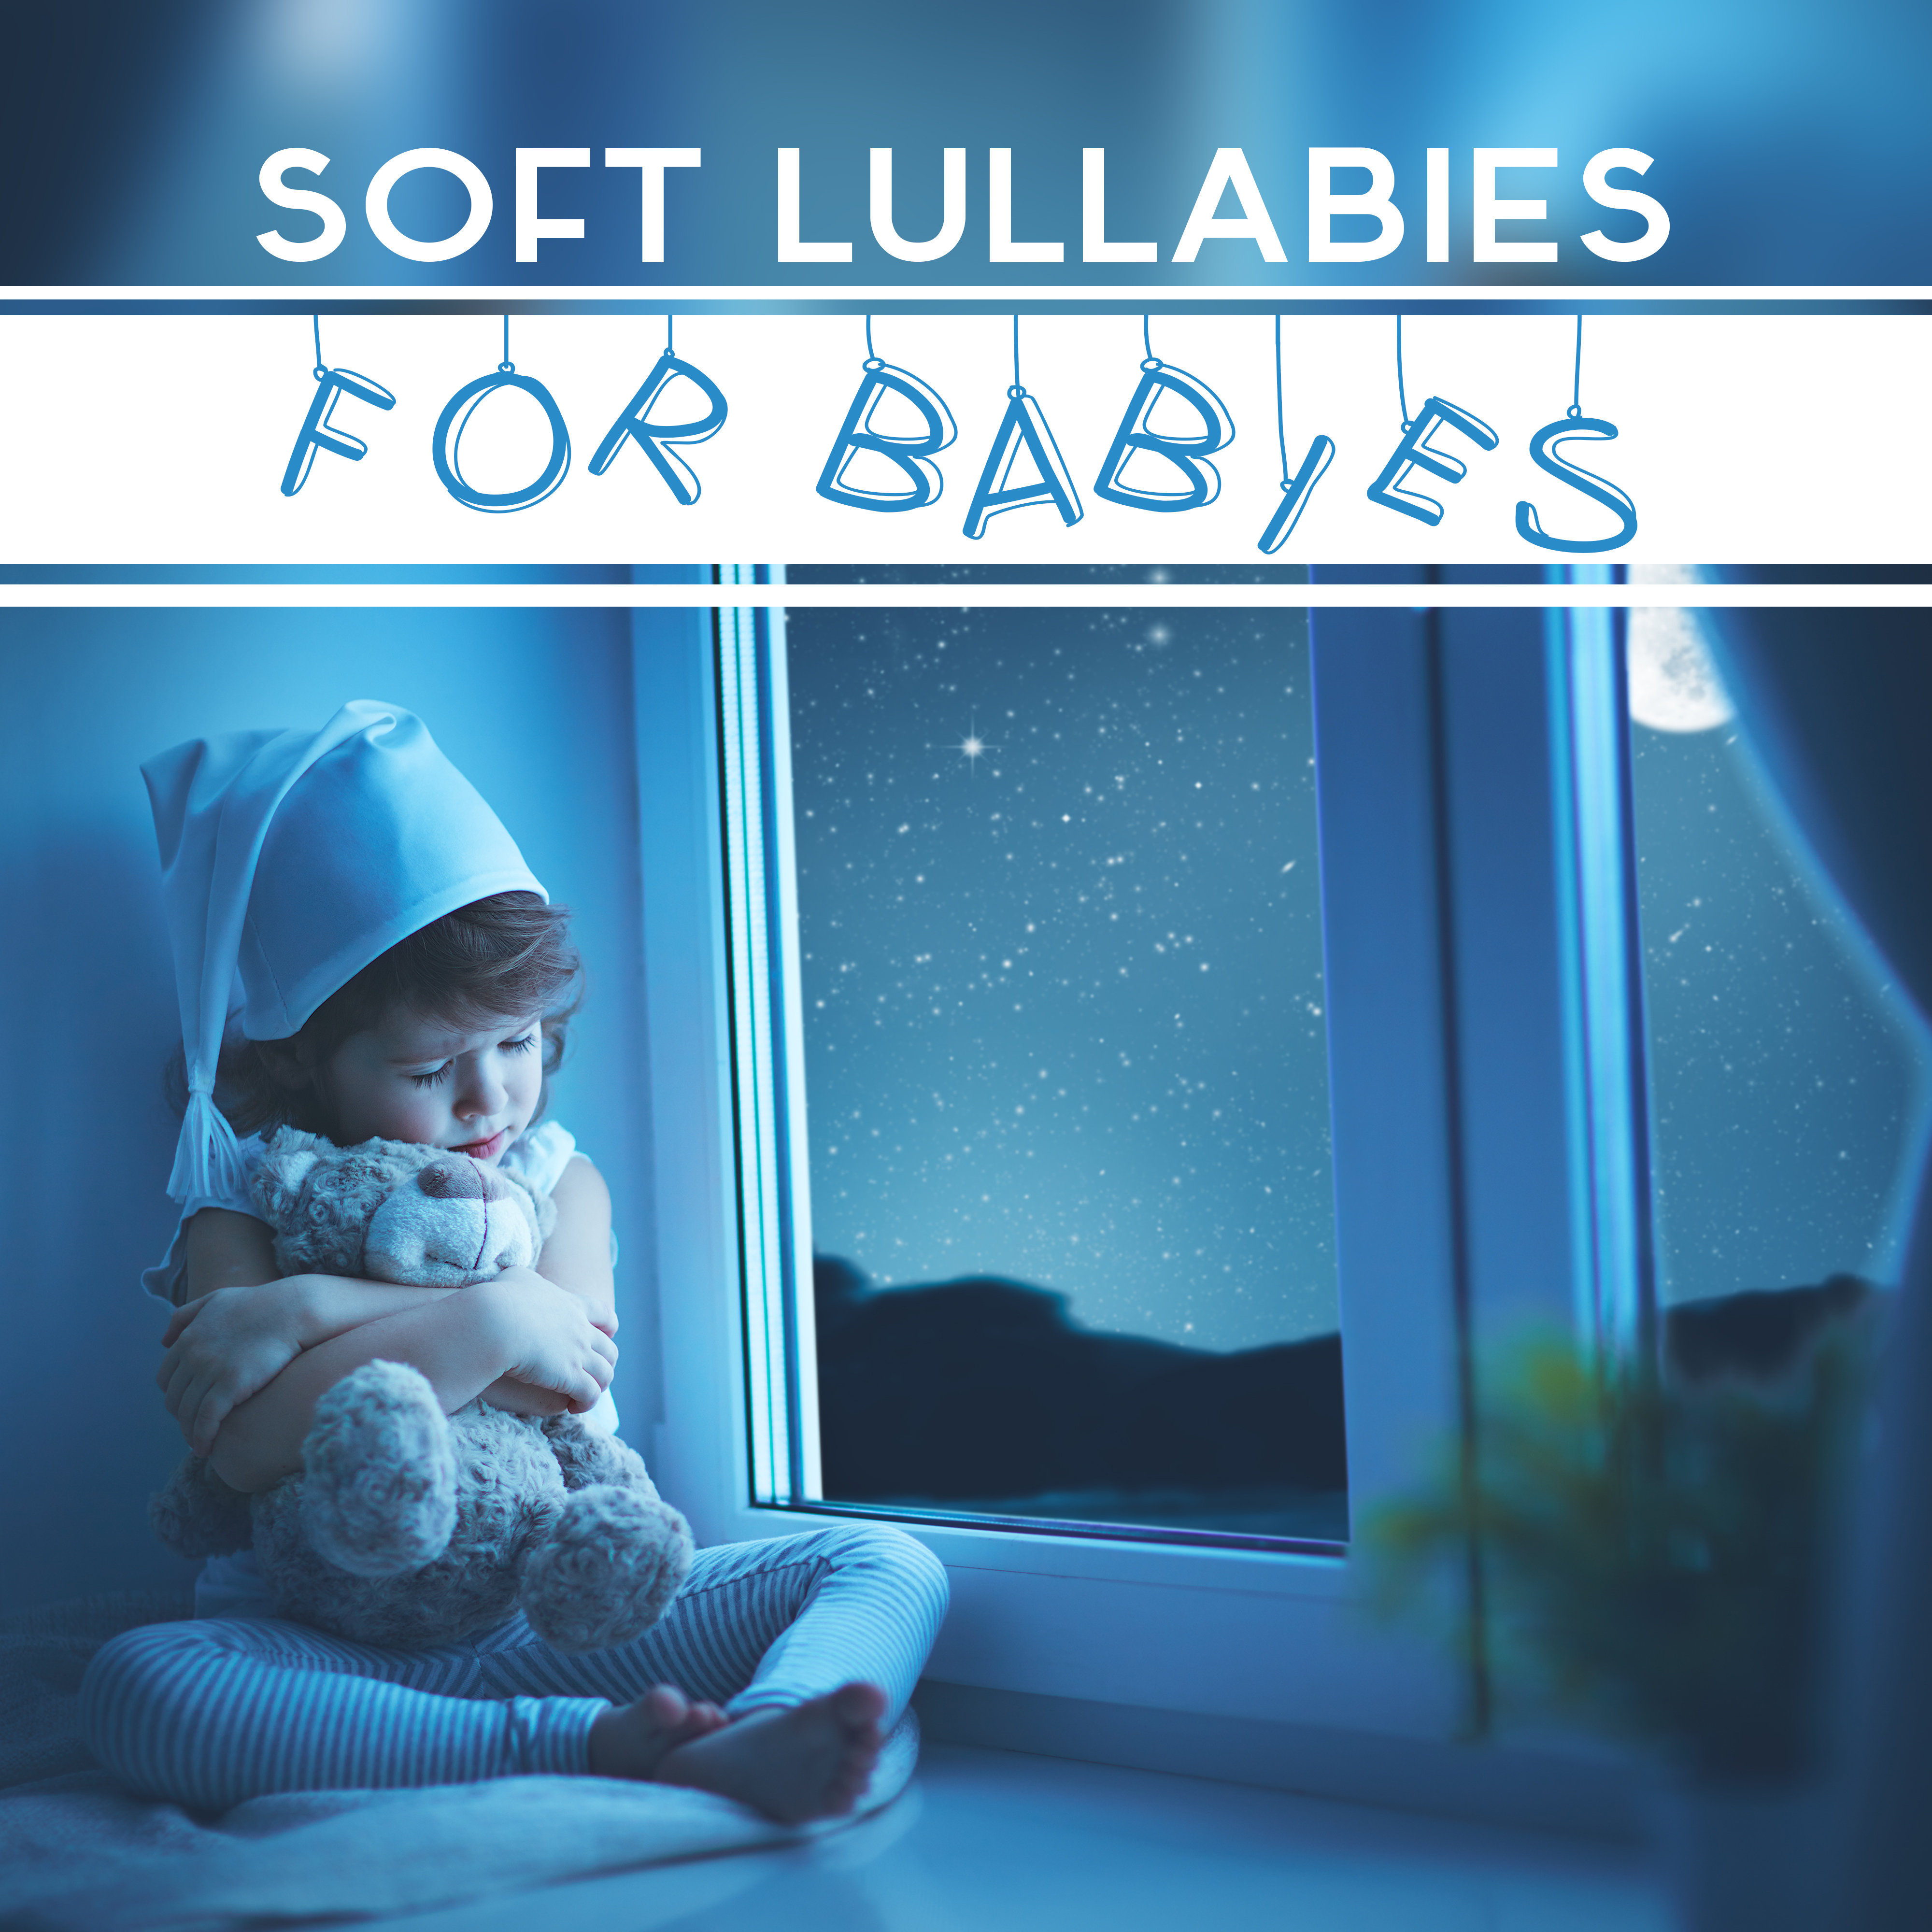 Soft Lullabies for Babies